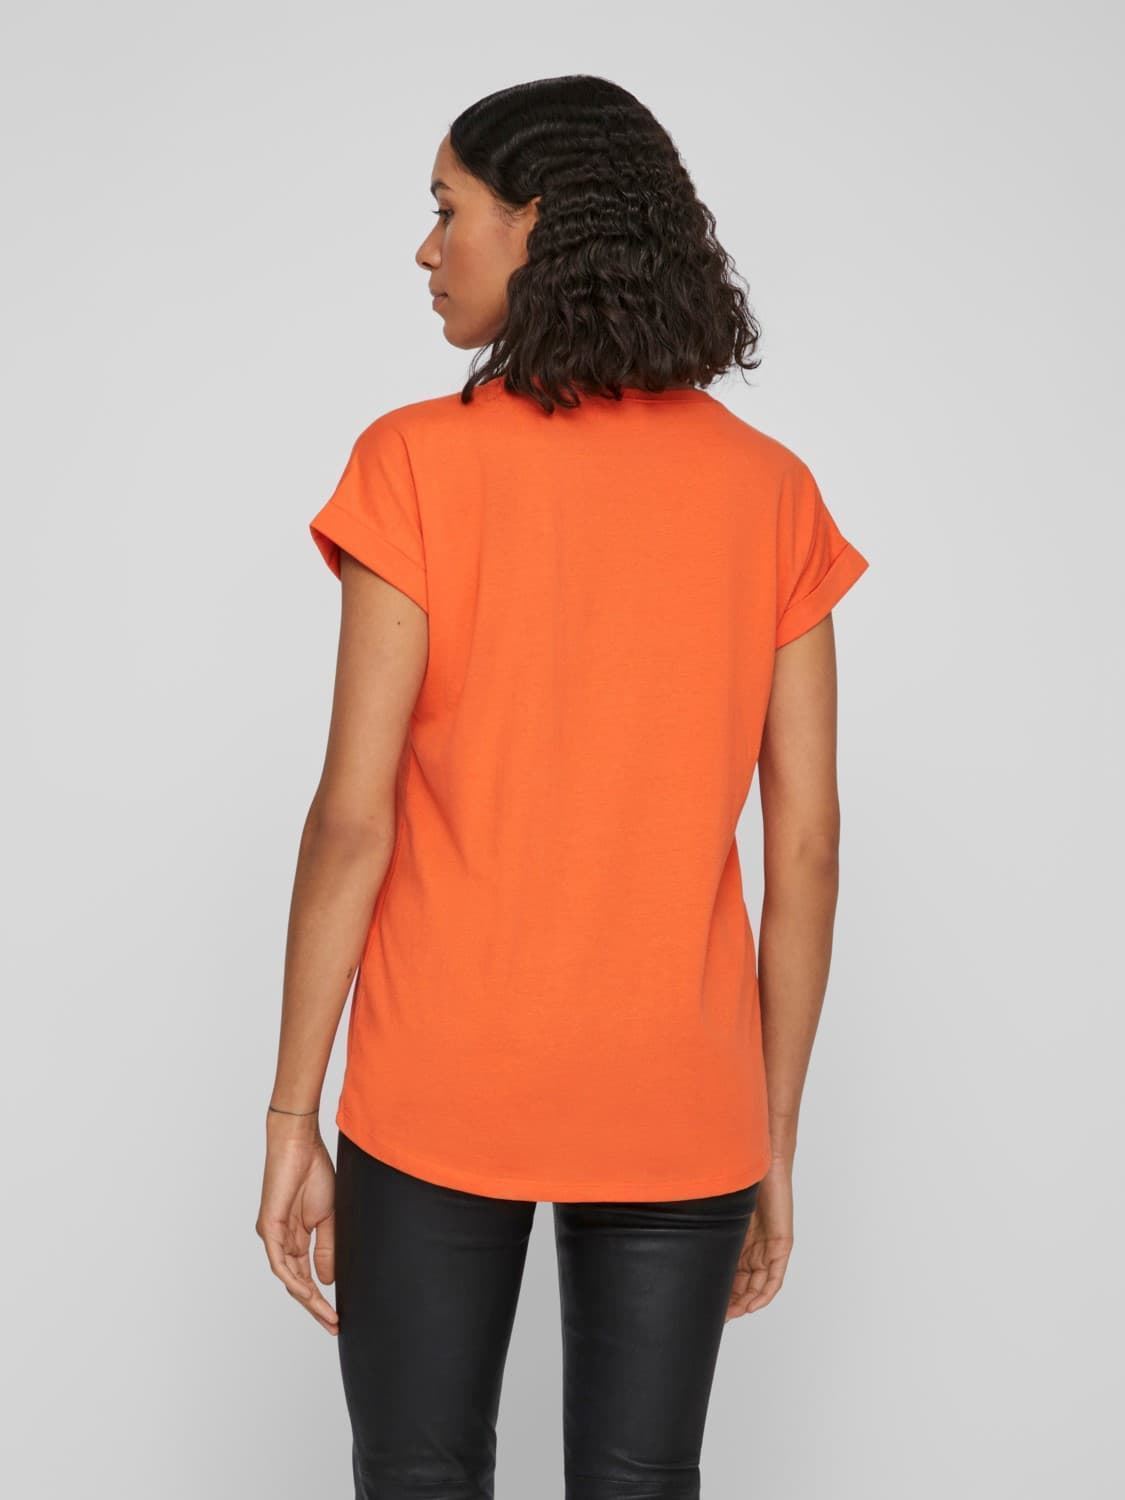 Camiseta vidreamers naranja - Imagen 2